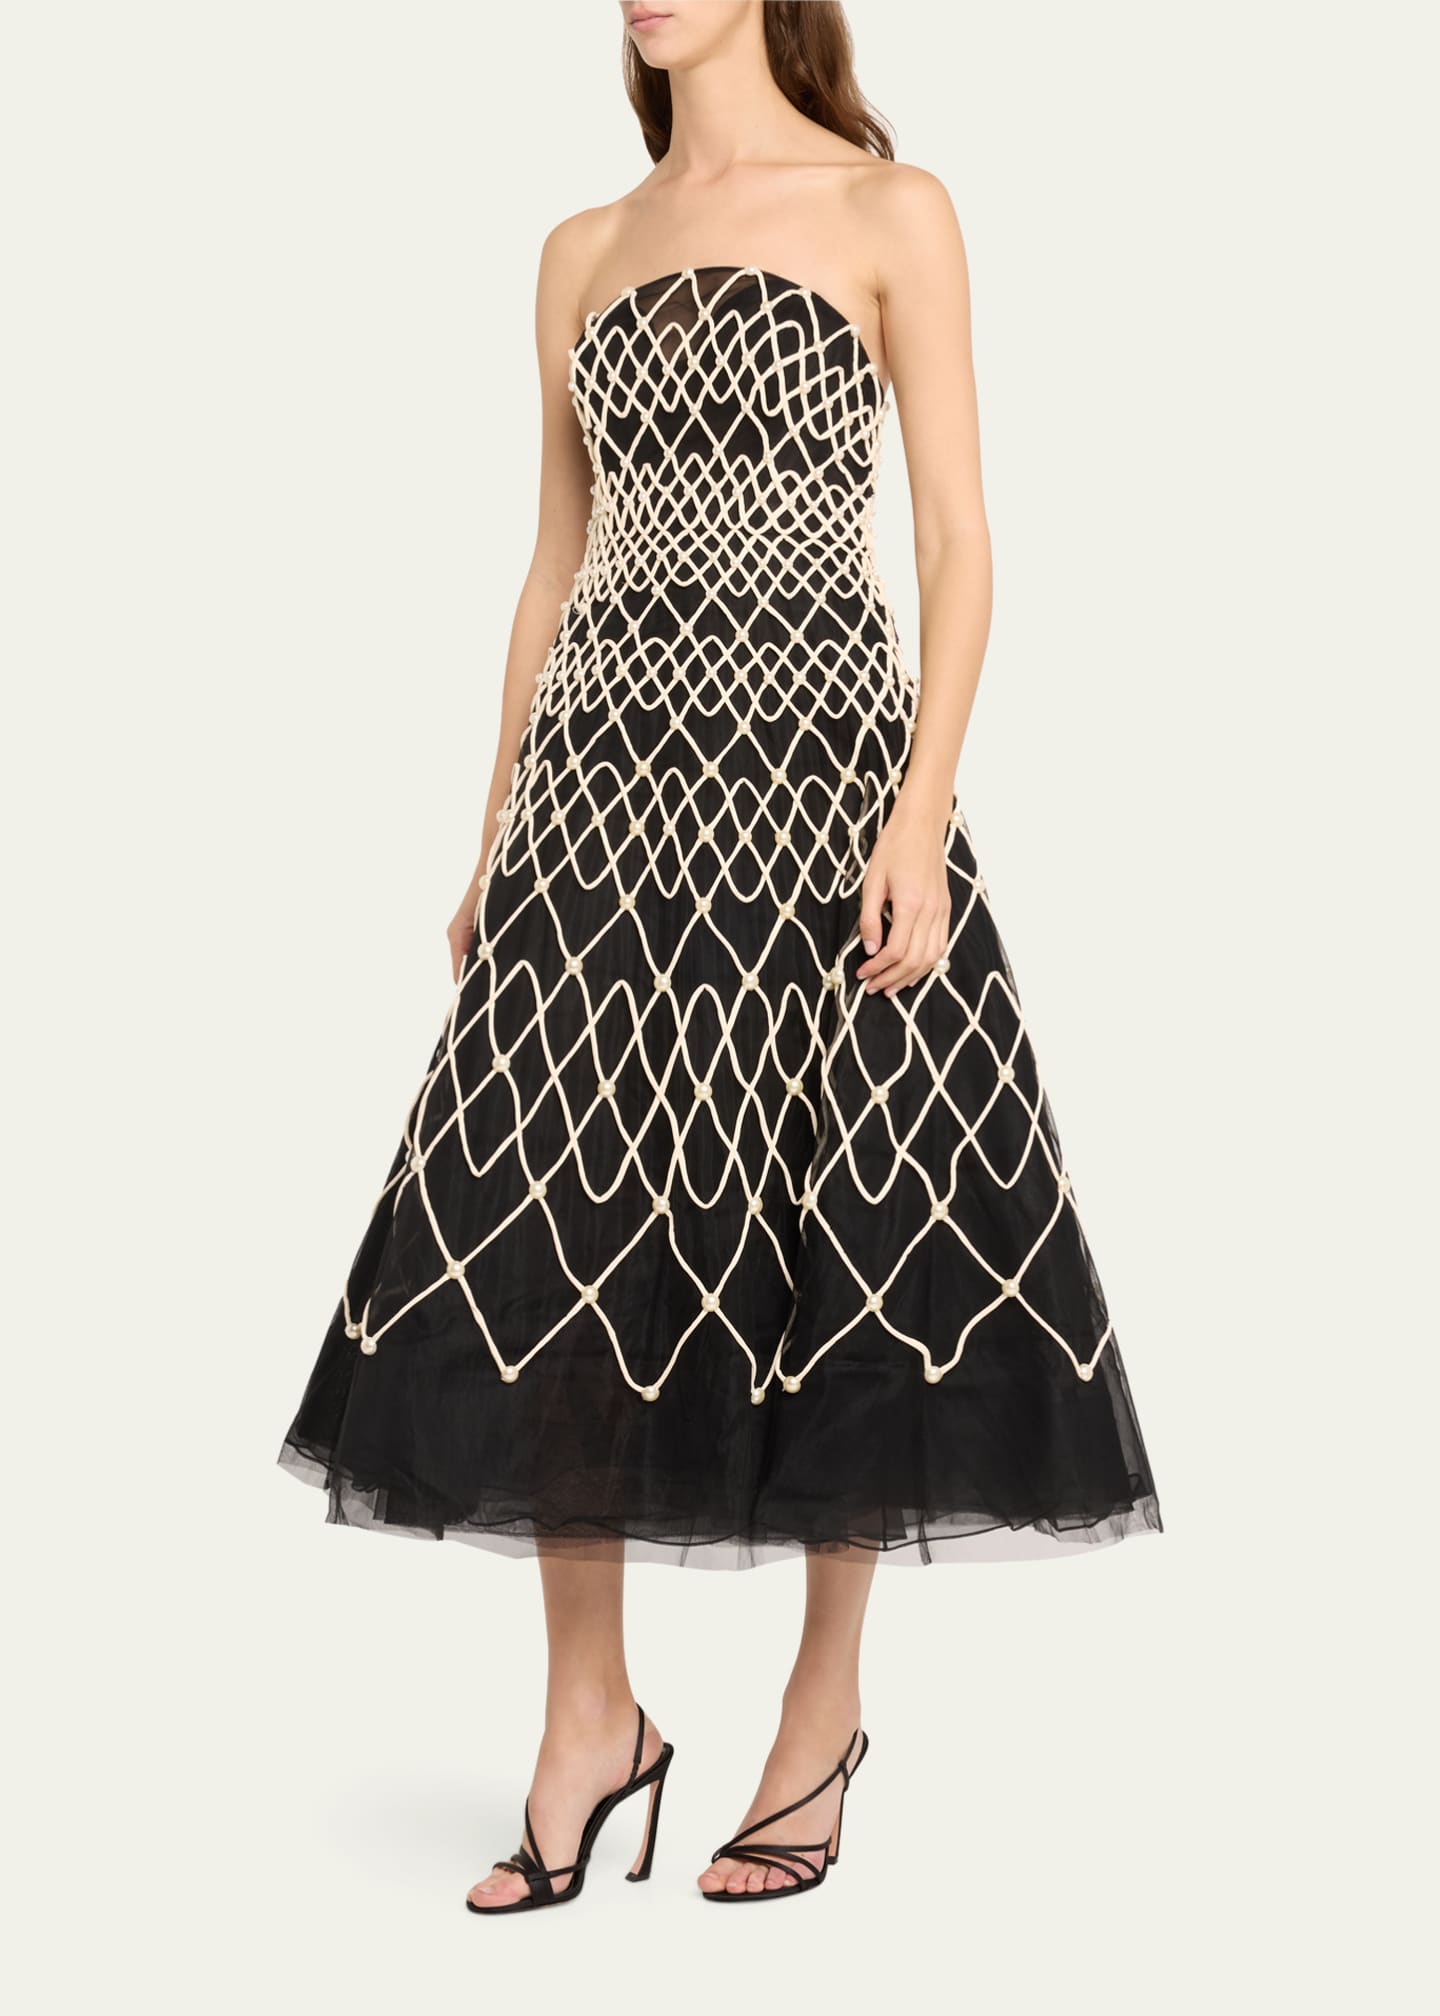 Carolina Herrera Embroidered Strapless Midi Dress - Bergdorf Goodman